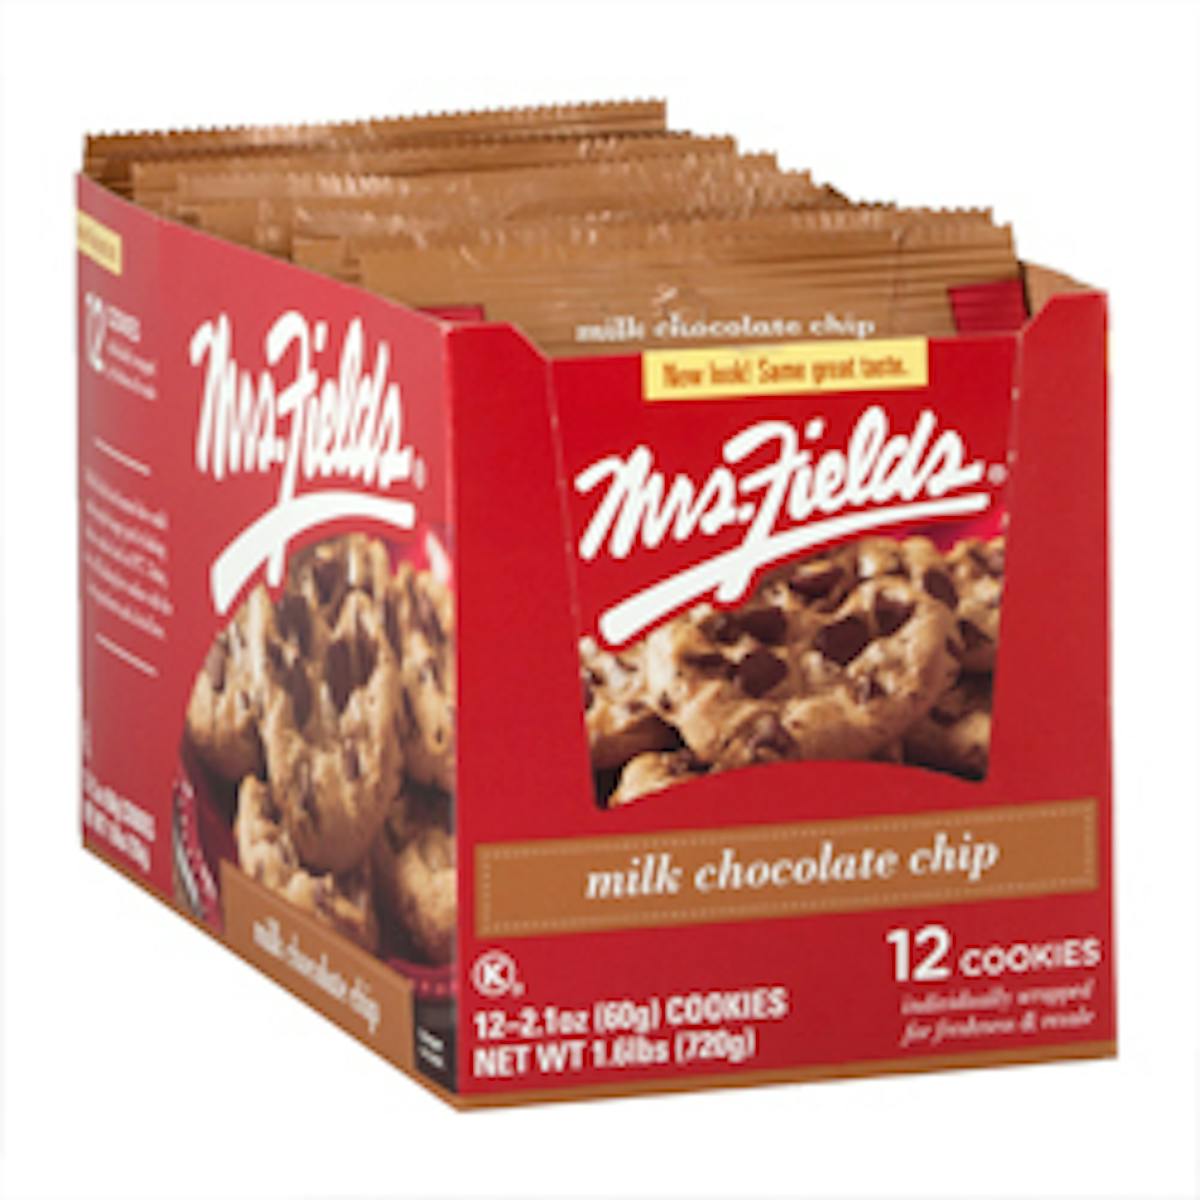 mrsfieldscccookiesmicromarkets 59a58bff42bdb